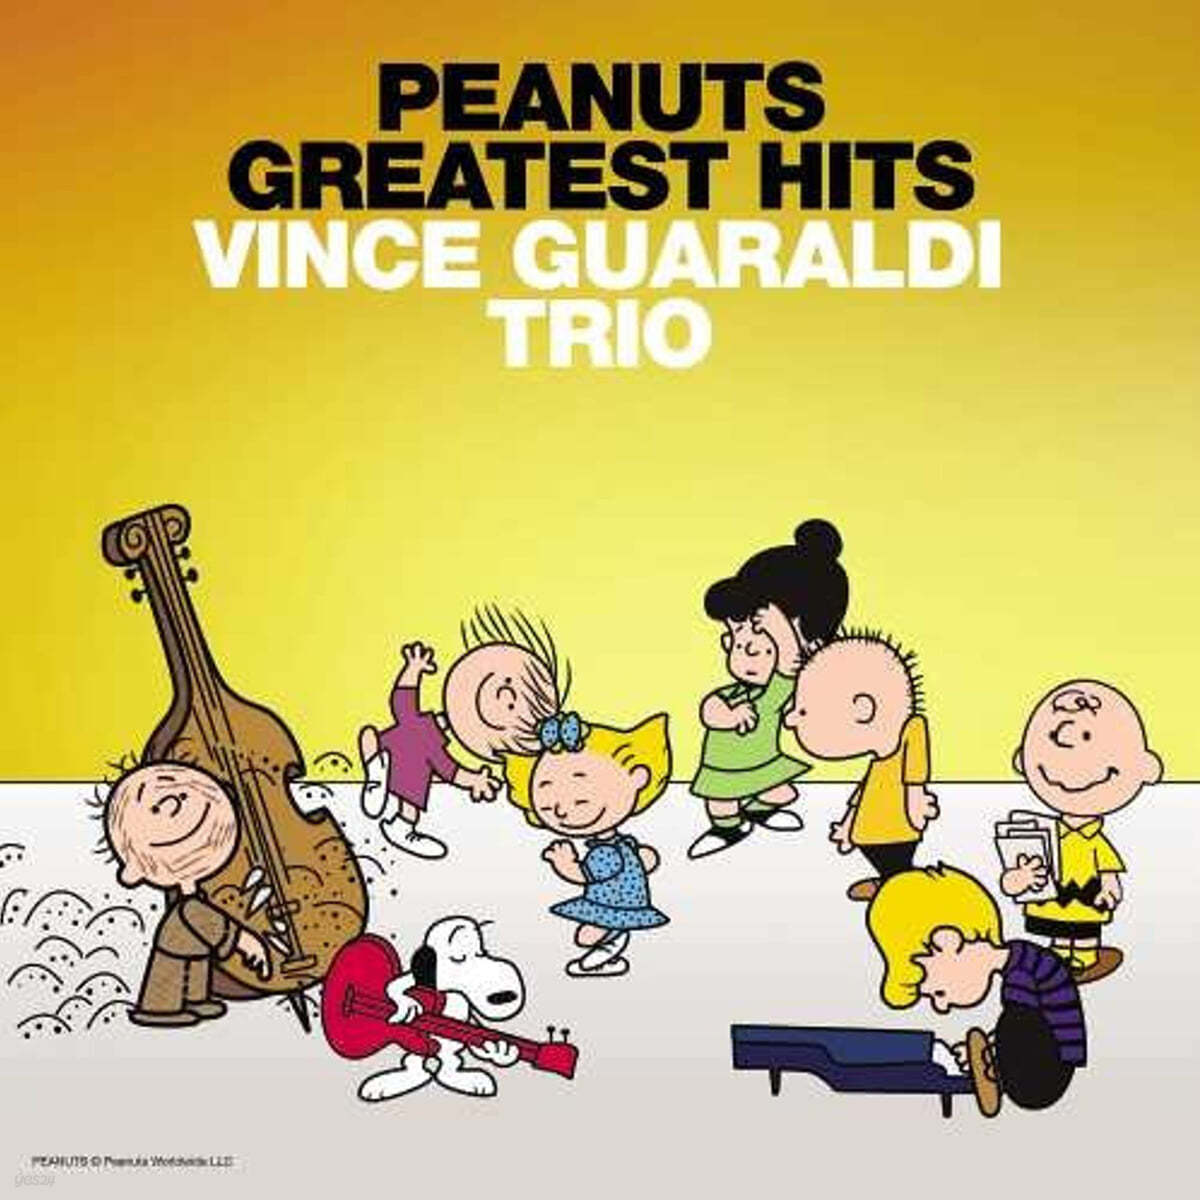 Vince Guaraldi Trio 애니메이션 '피너츠' 사운드트랙 베스트 (Peanuts Greatest Hits) [LP]